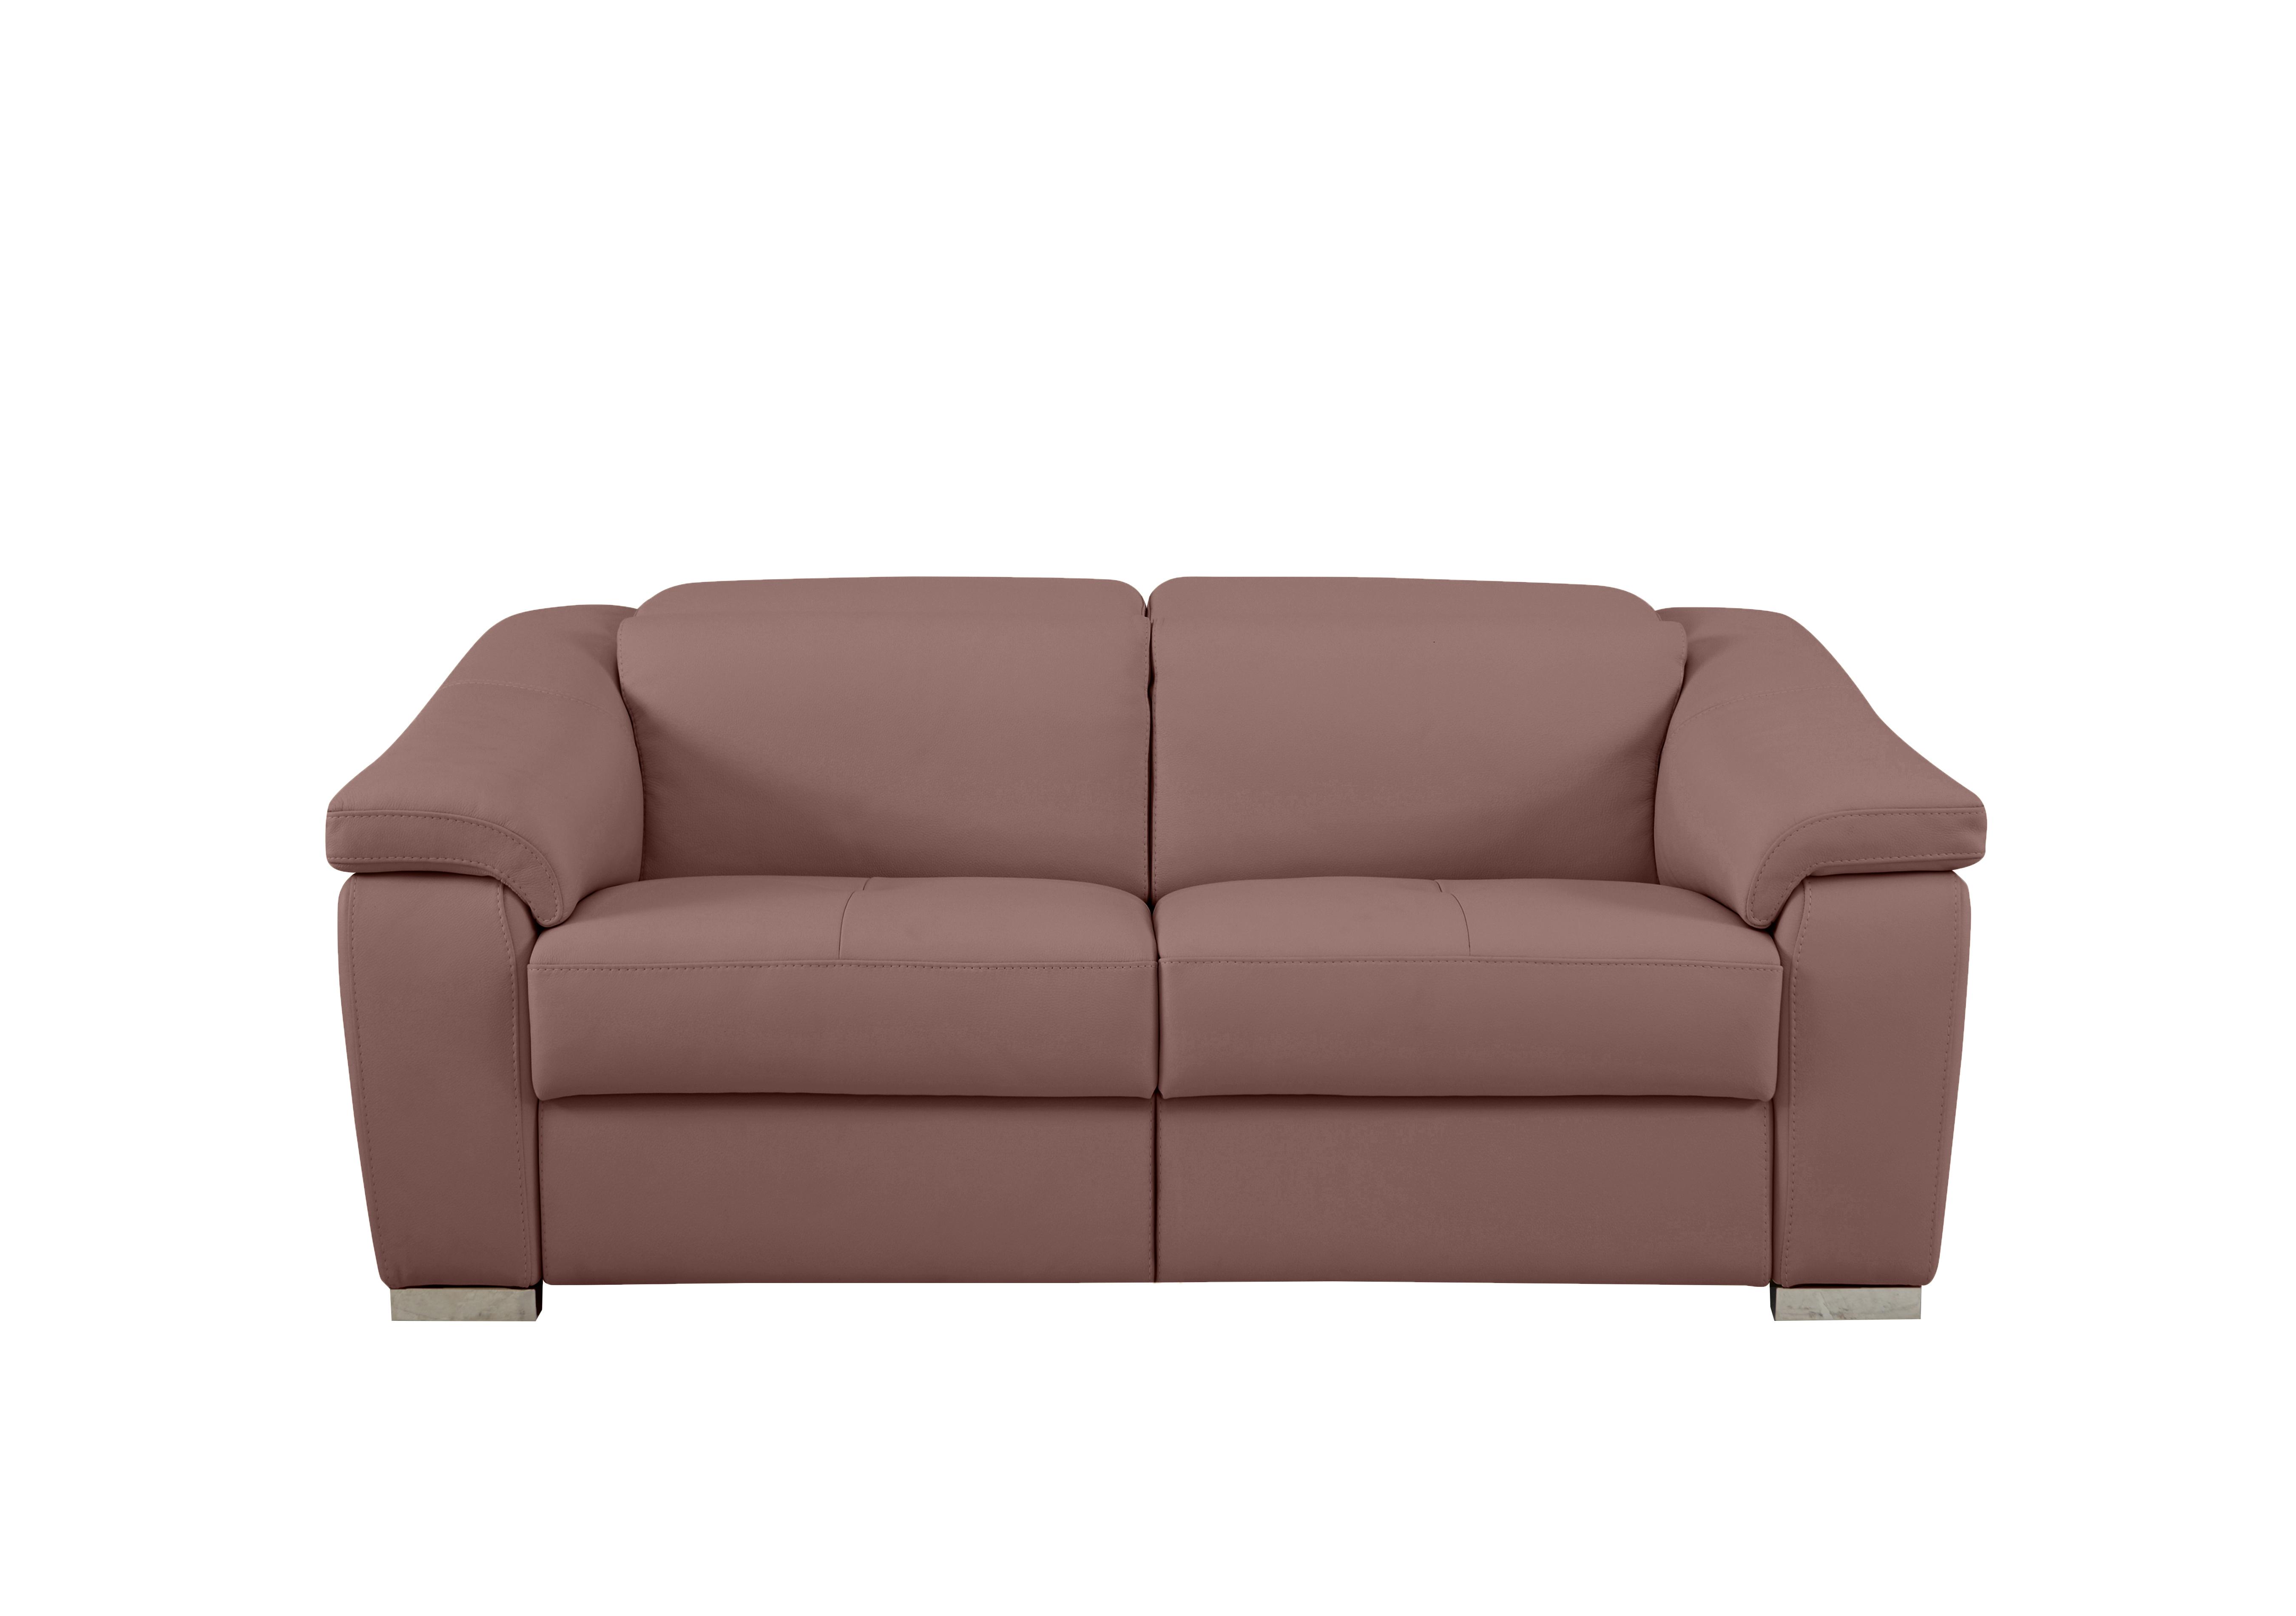 Galileo 2 Seater Leather Sofa in Botero Cipria 2160 Ch on Furniture Village